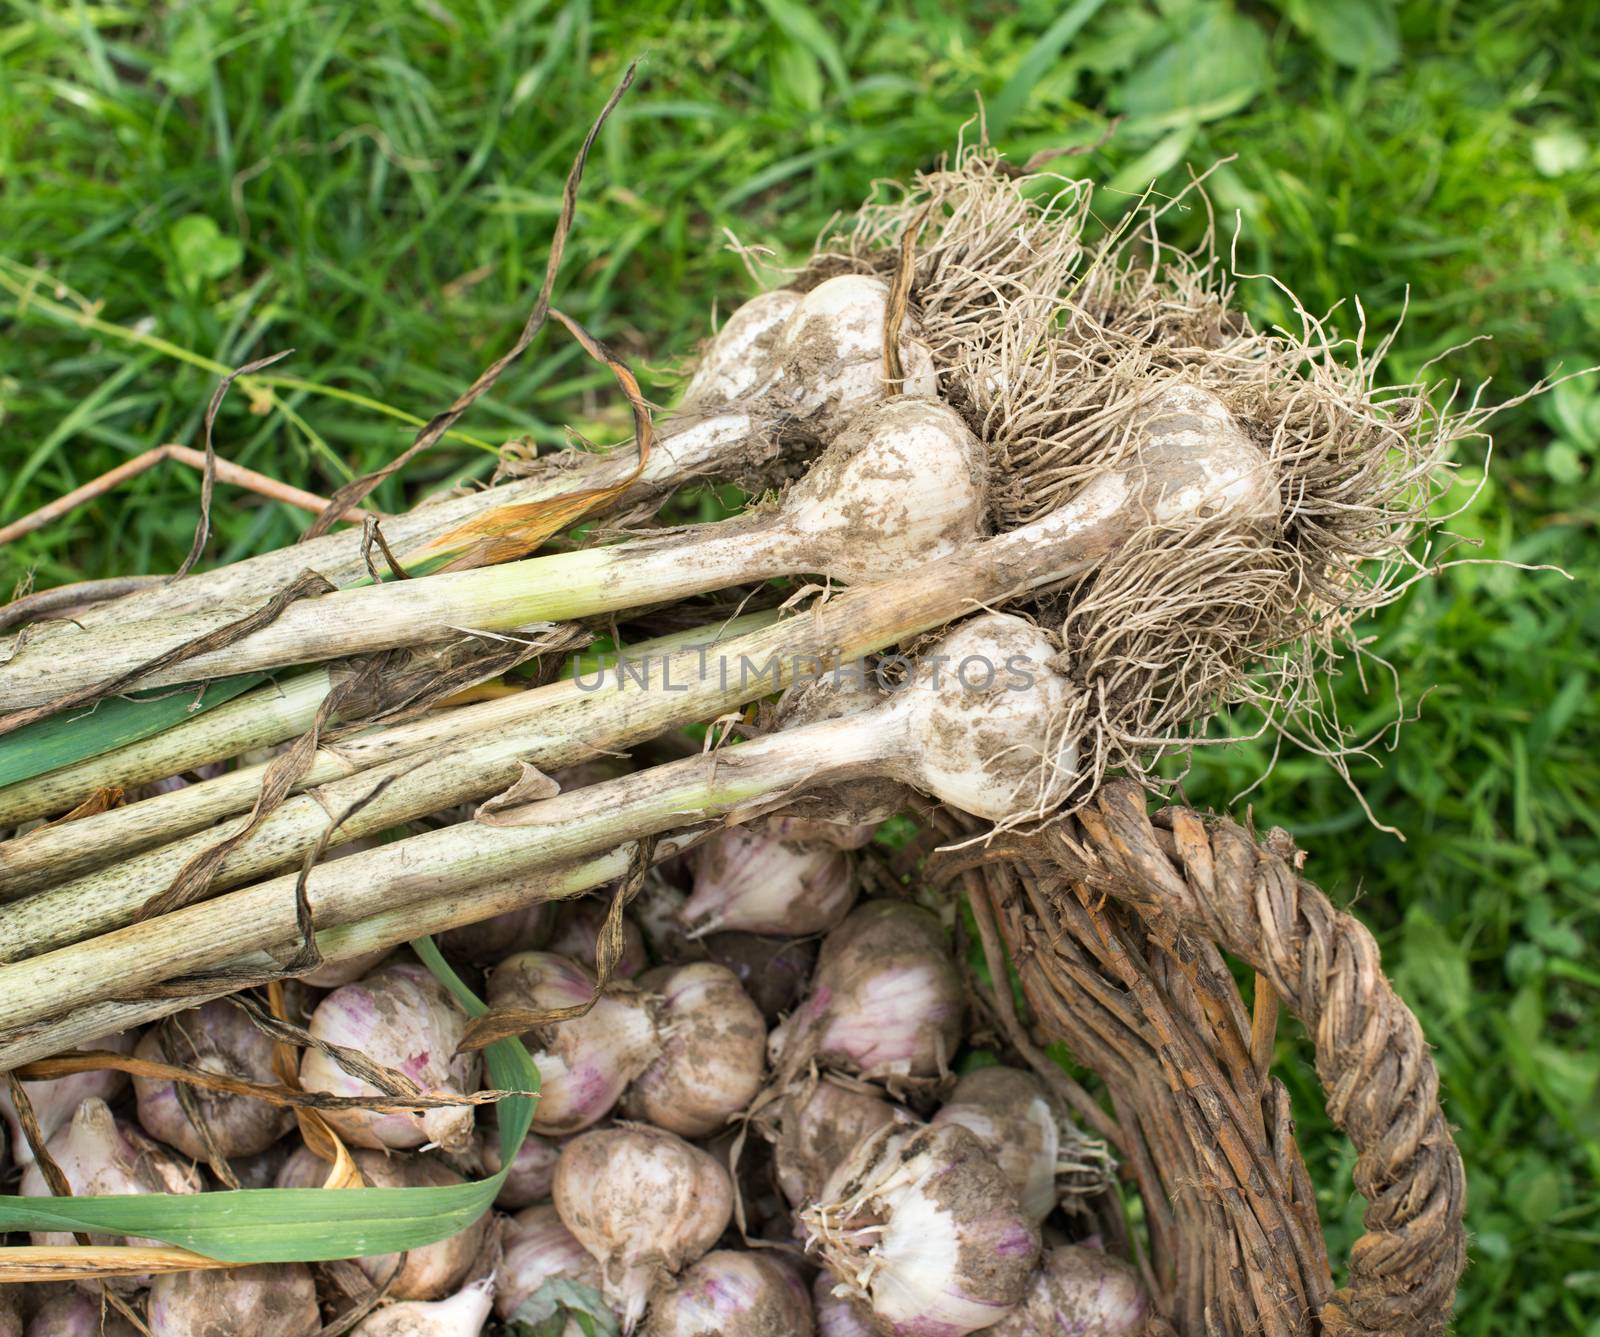 Fresh garlic in the wicker basket on the green grass